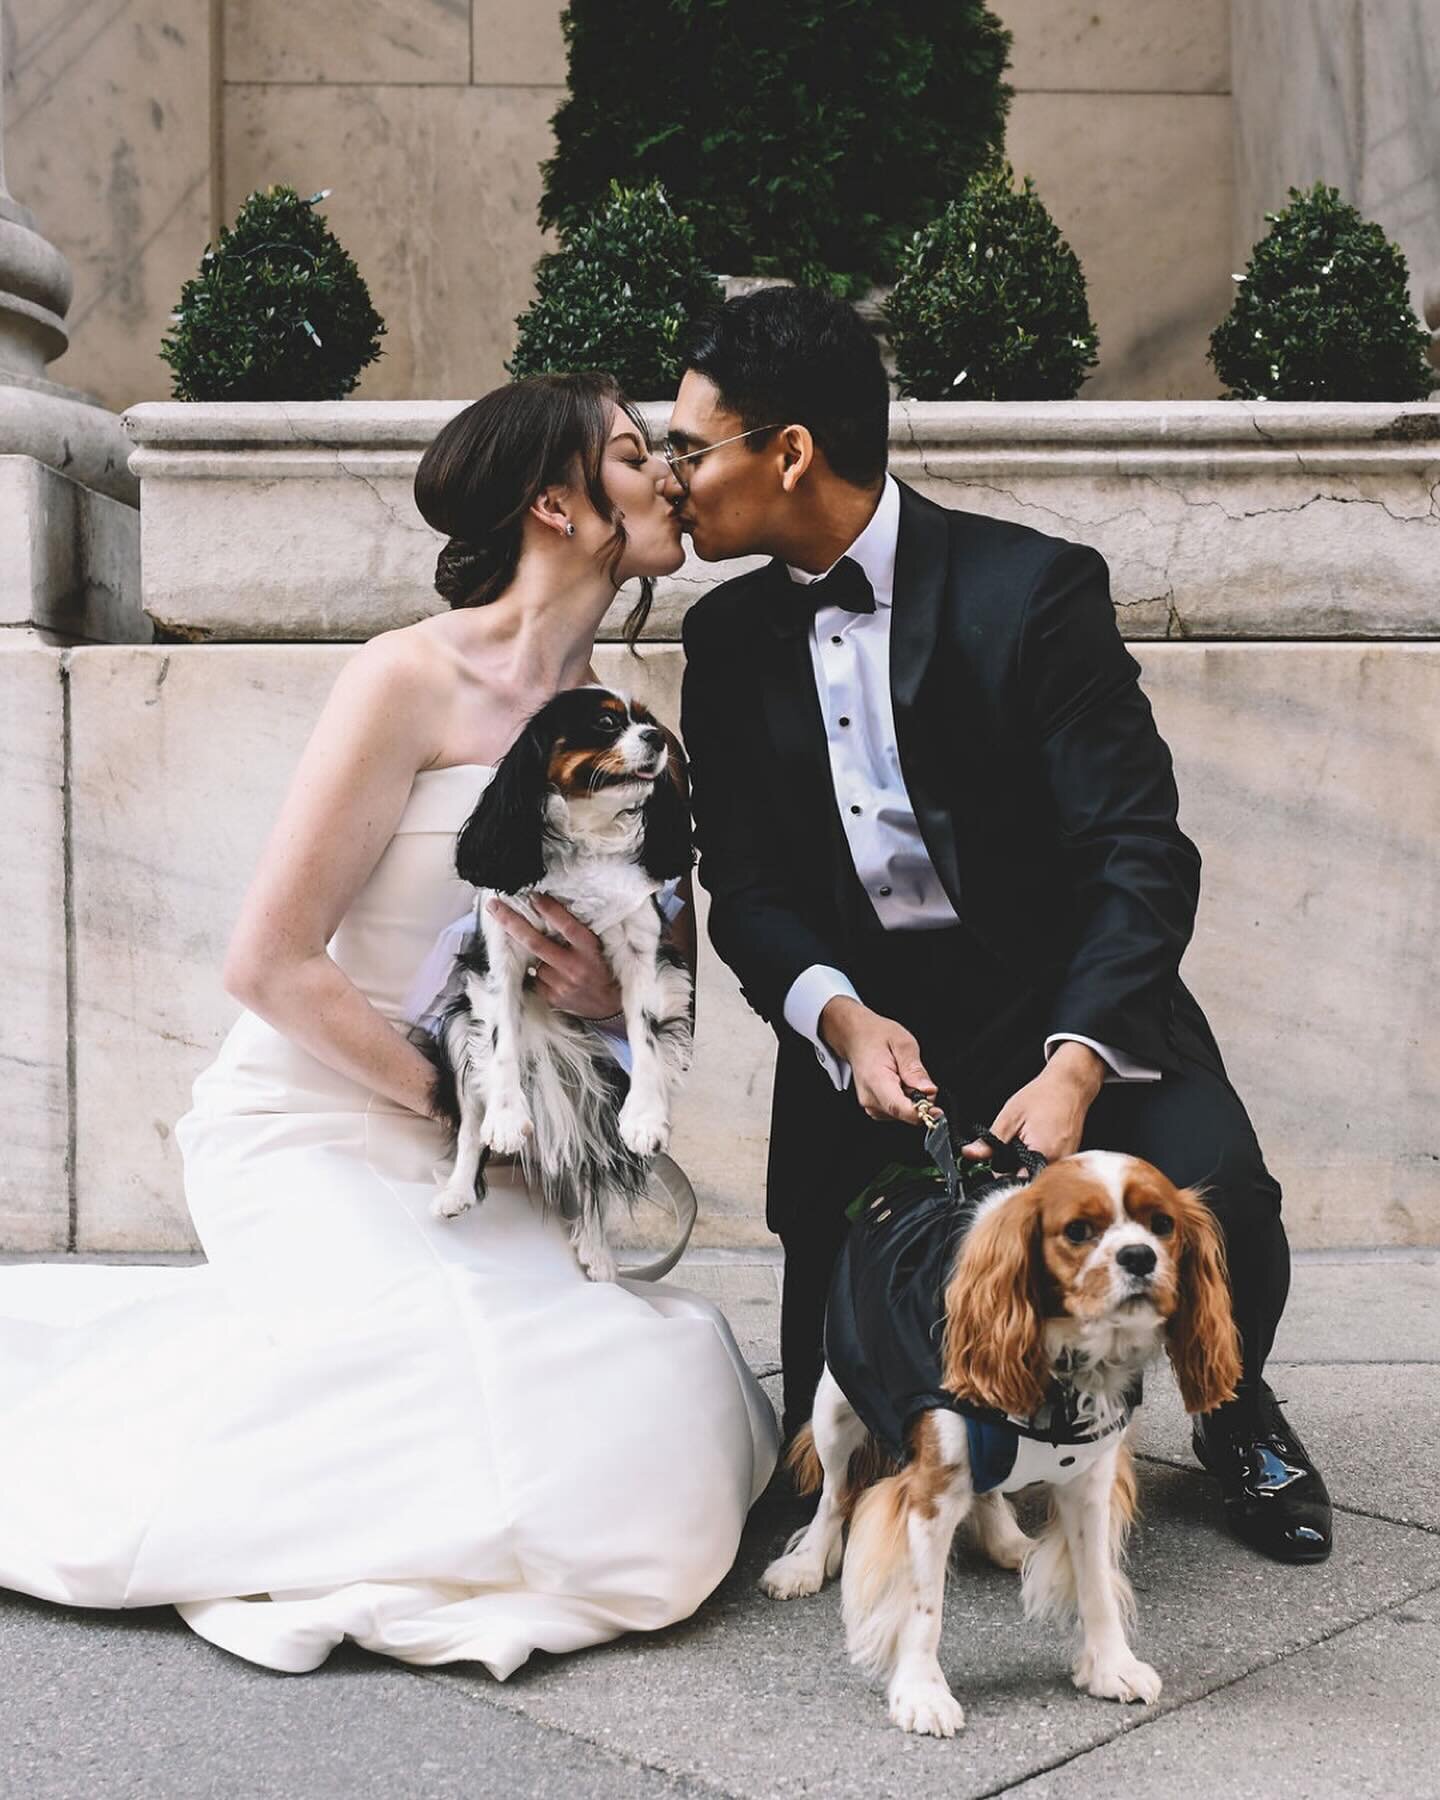 Puppy Love 
.
.
.
.
#robertcarlonewyork #nyc #nationalpuppyday #nycwedding #nycweddingphotographer #nycweddingphotography #nycbride #nycdogs #engagednyc #weddingvenue #weddingdress #tuxedo #love #happy #kiss #philly #phillywedding #cheers